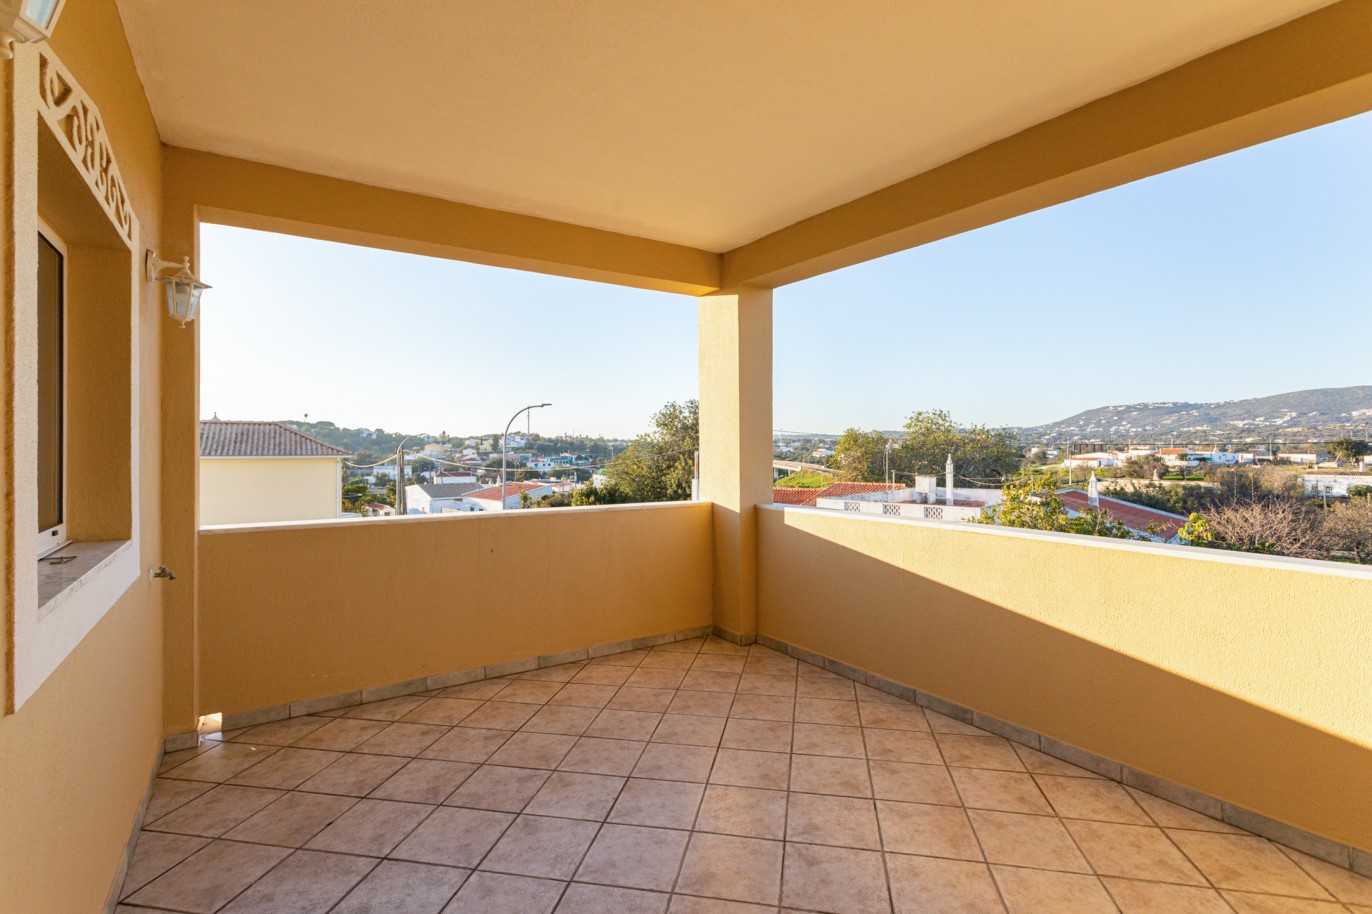 Moradia V4 em zona prestigiada, para venda em Almancil, Algarve_217670